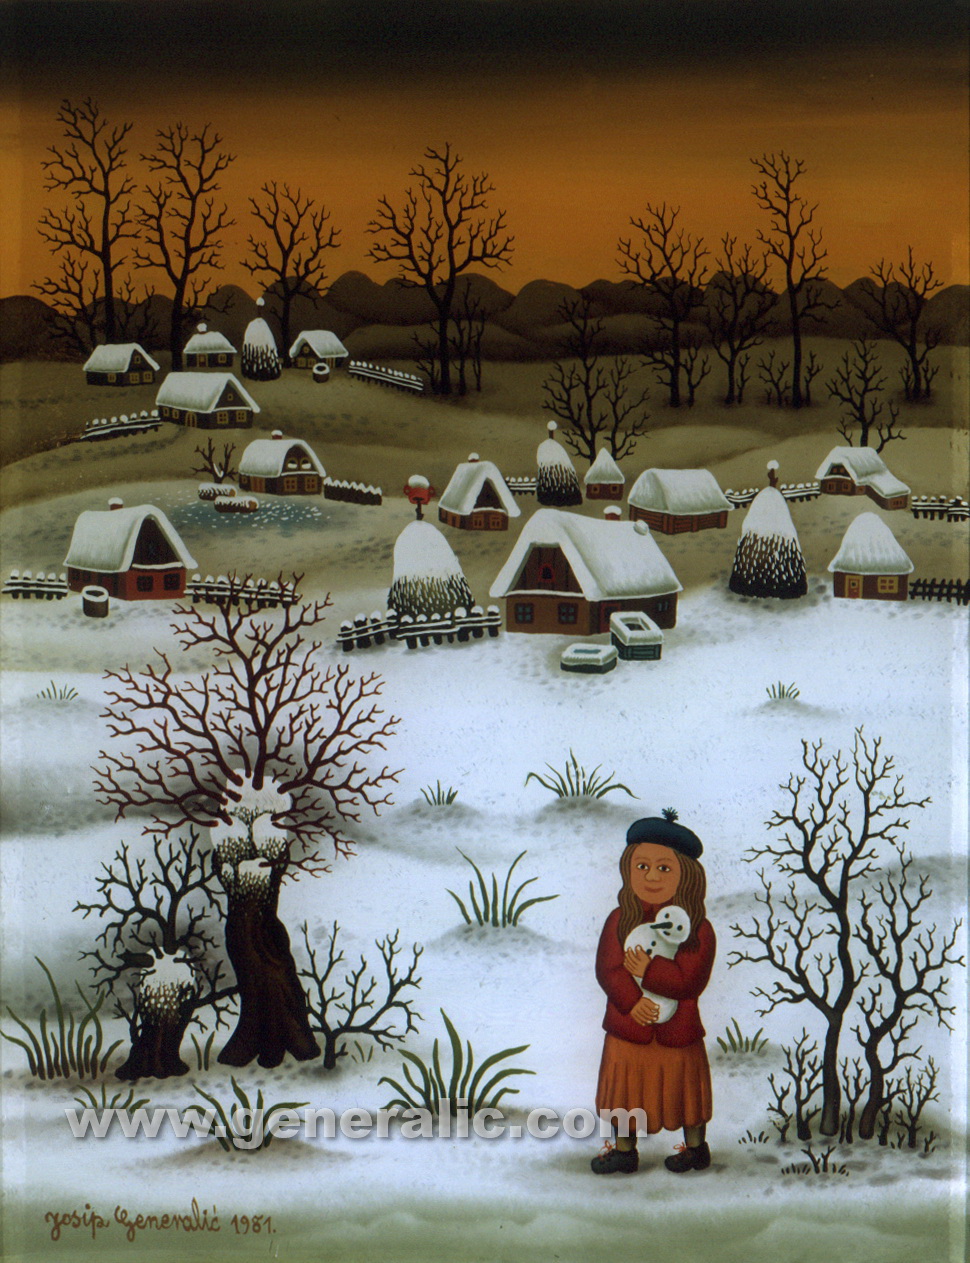 Josip Generalic, 1981, Girl with snowman, oil on glass